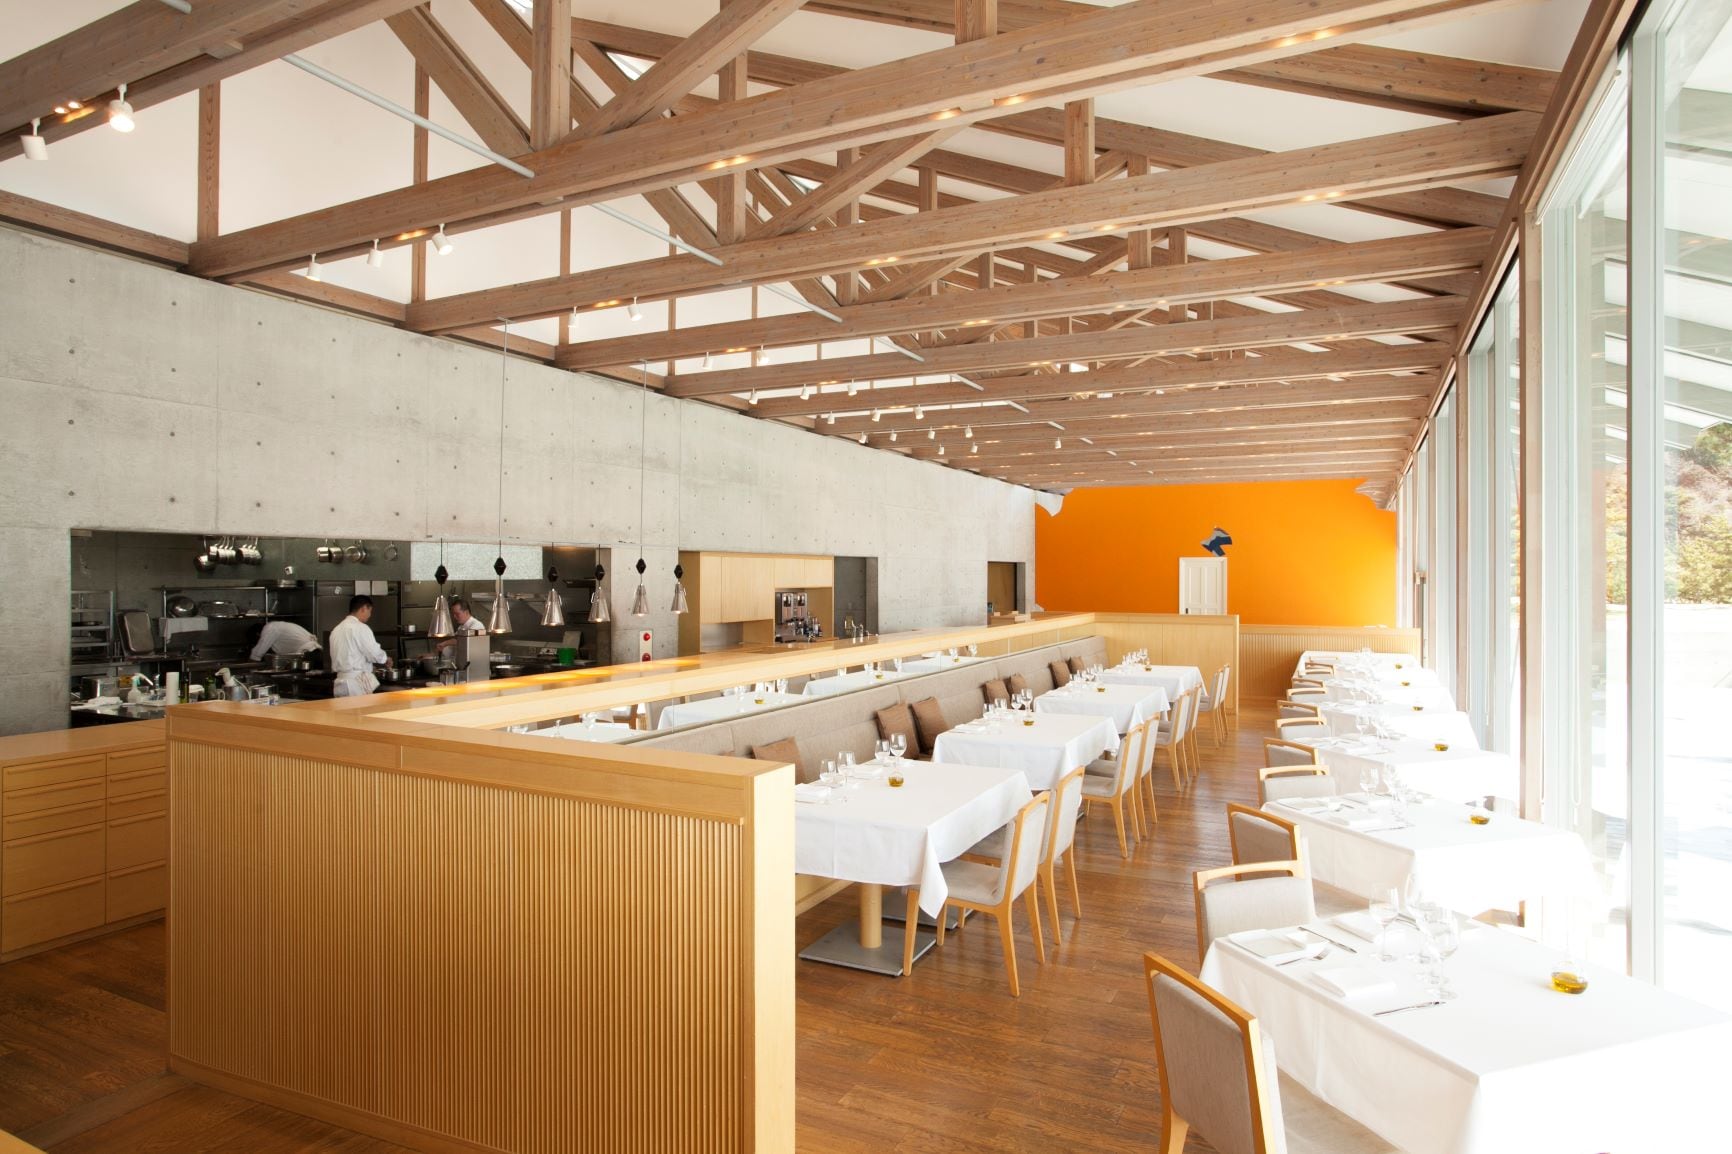 Terrace restaurant